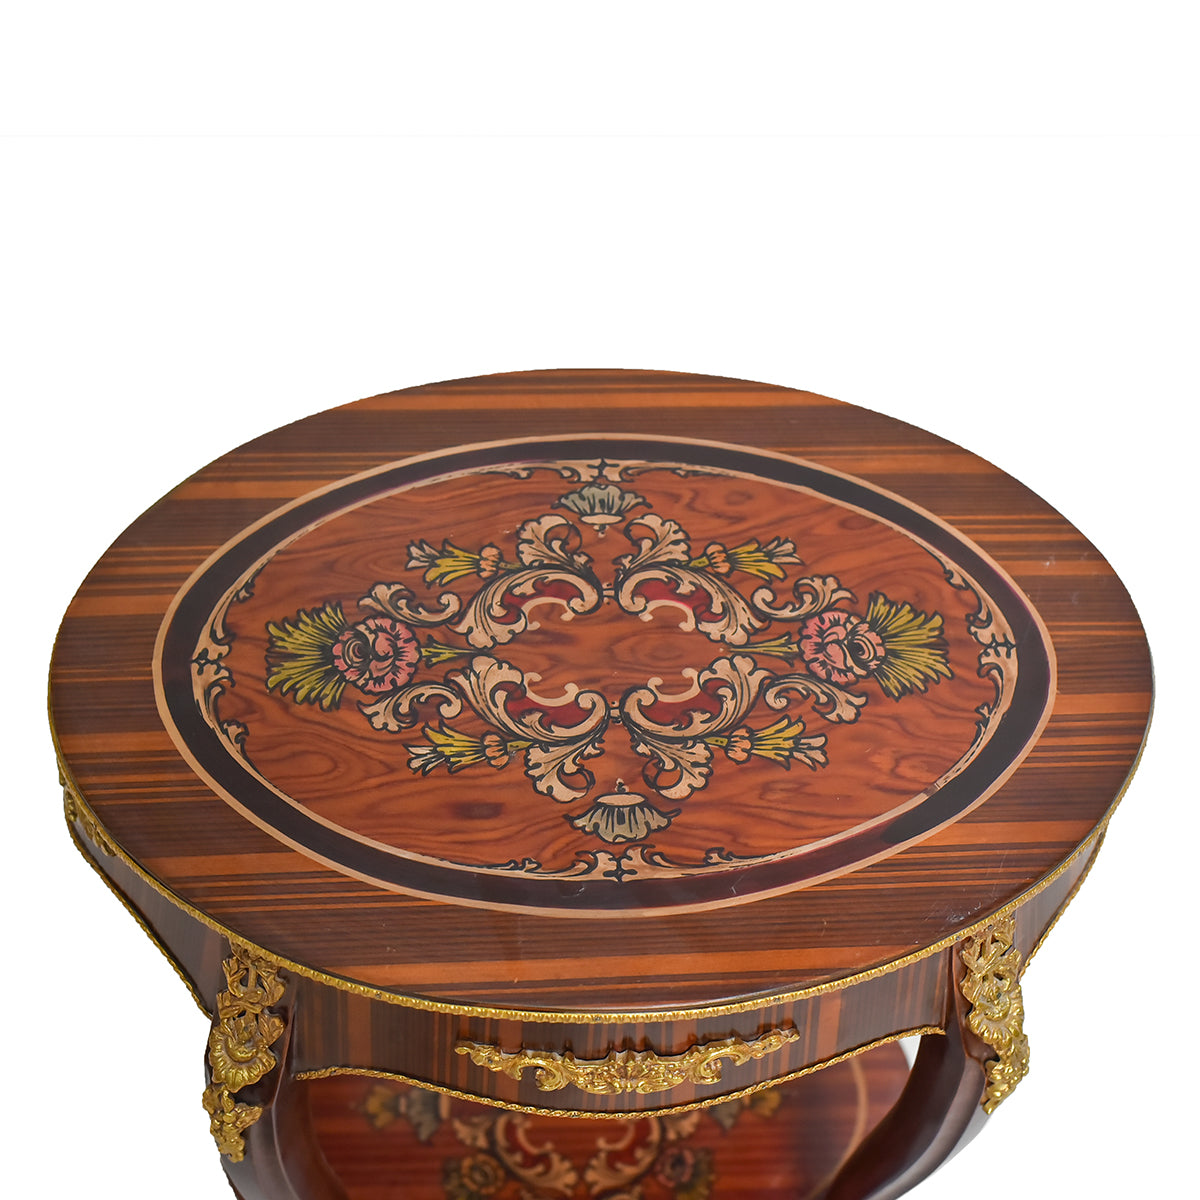 Ormolu mounted Louis XV side round table (2 set)